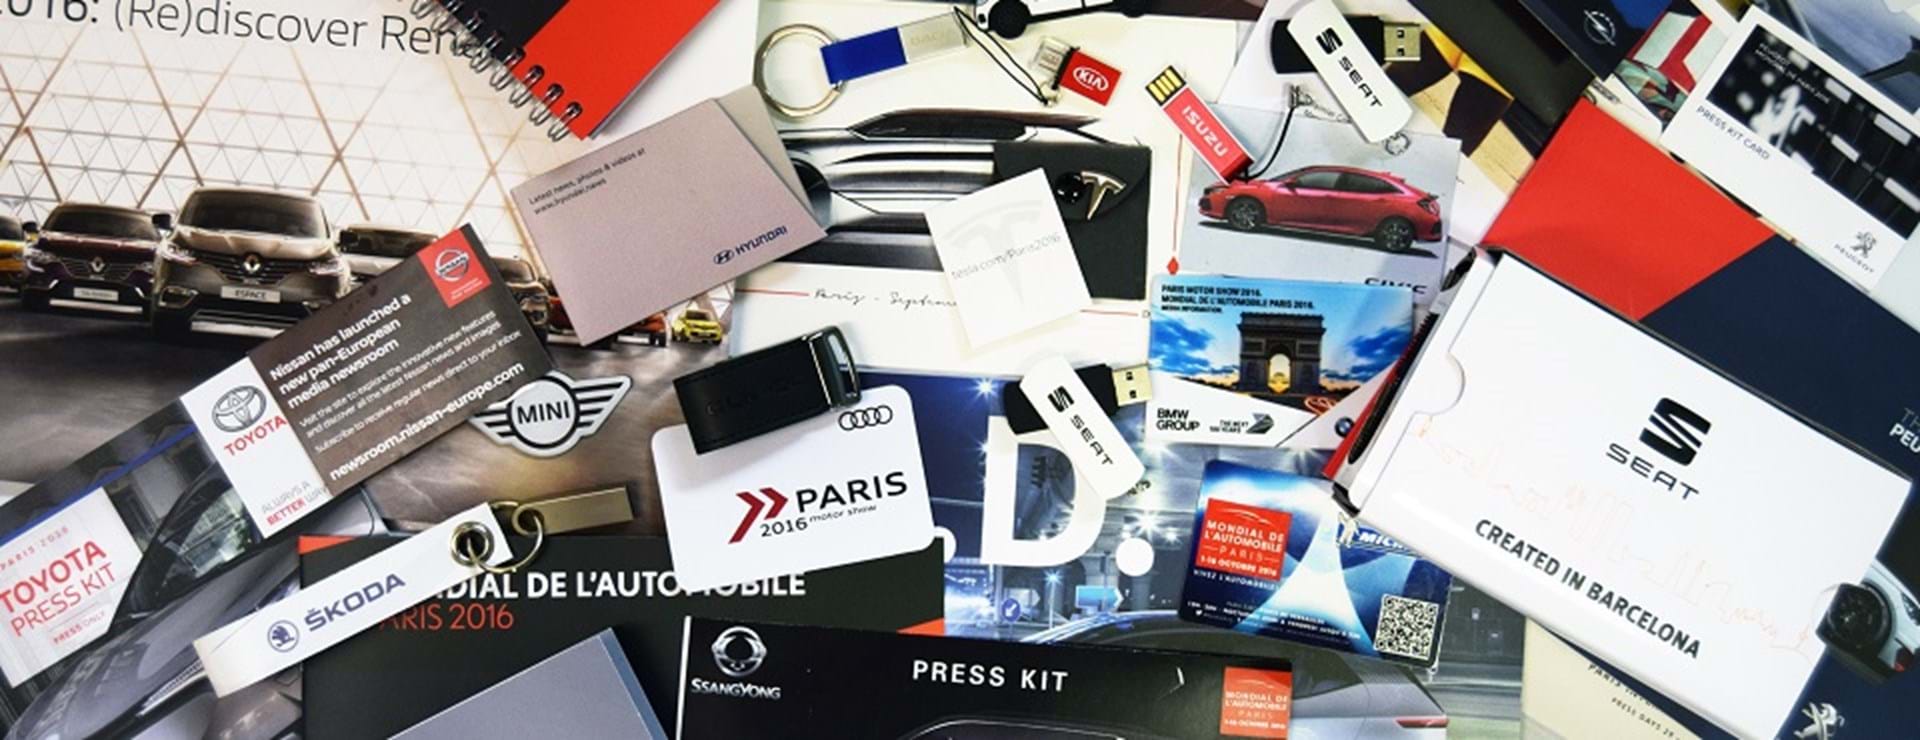 Paris 2016 press kits_web header edit.jpg